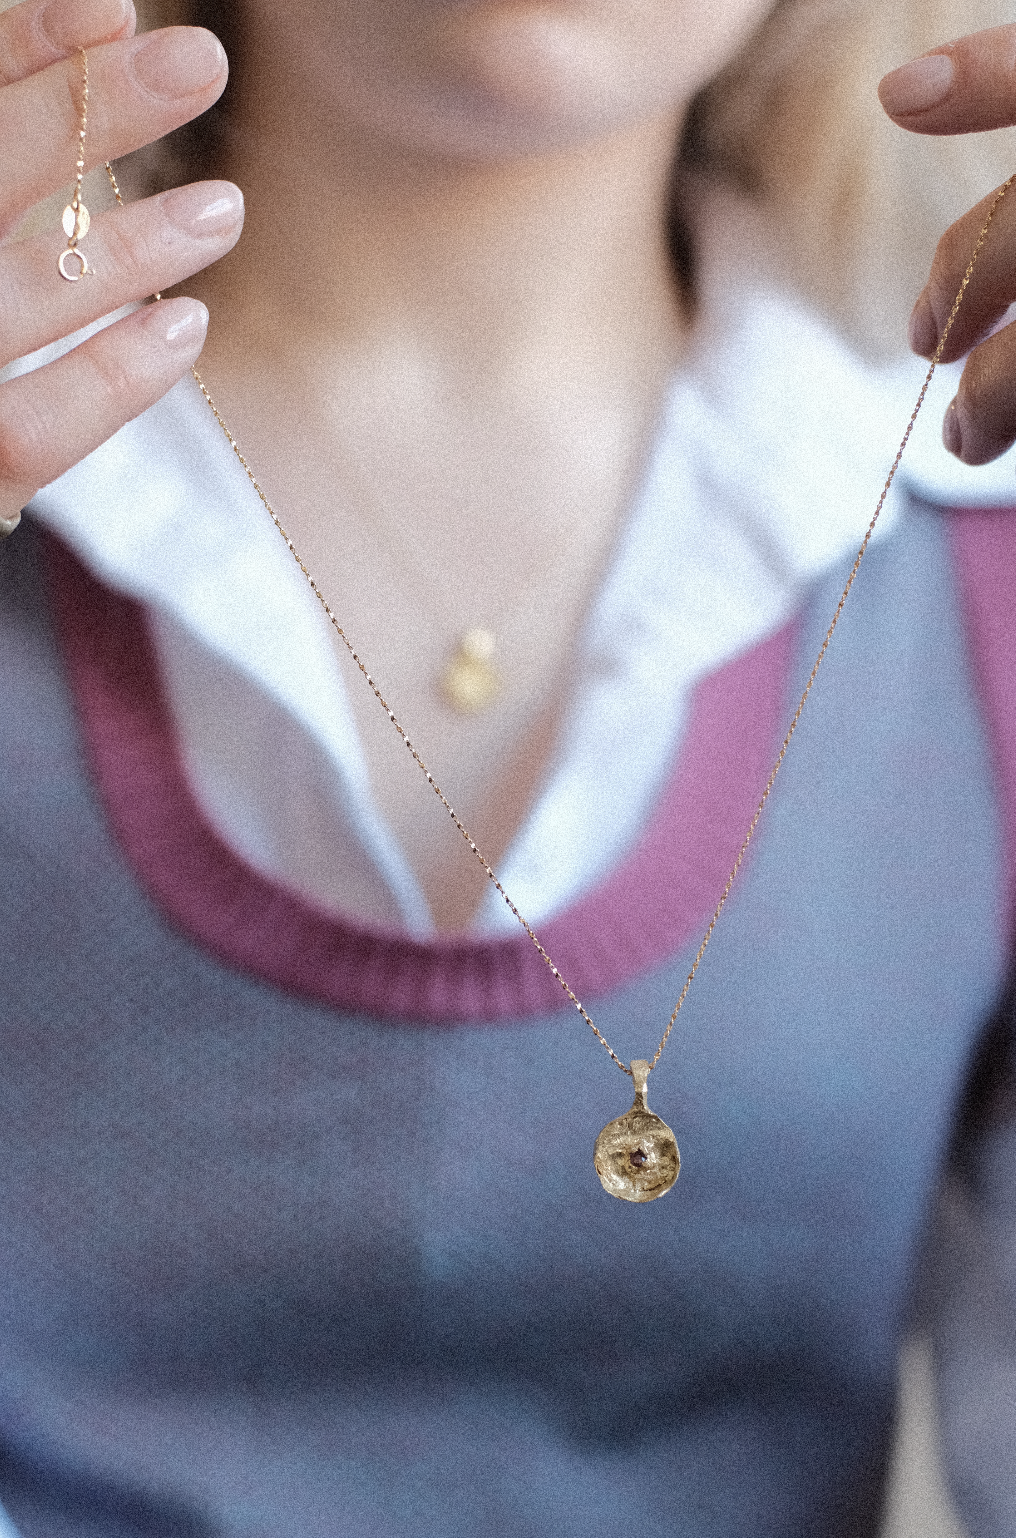 The Circulus Sunken tourmaline Amulet Necklace.